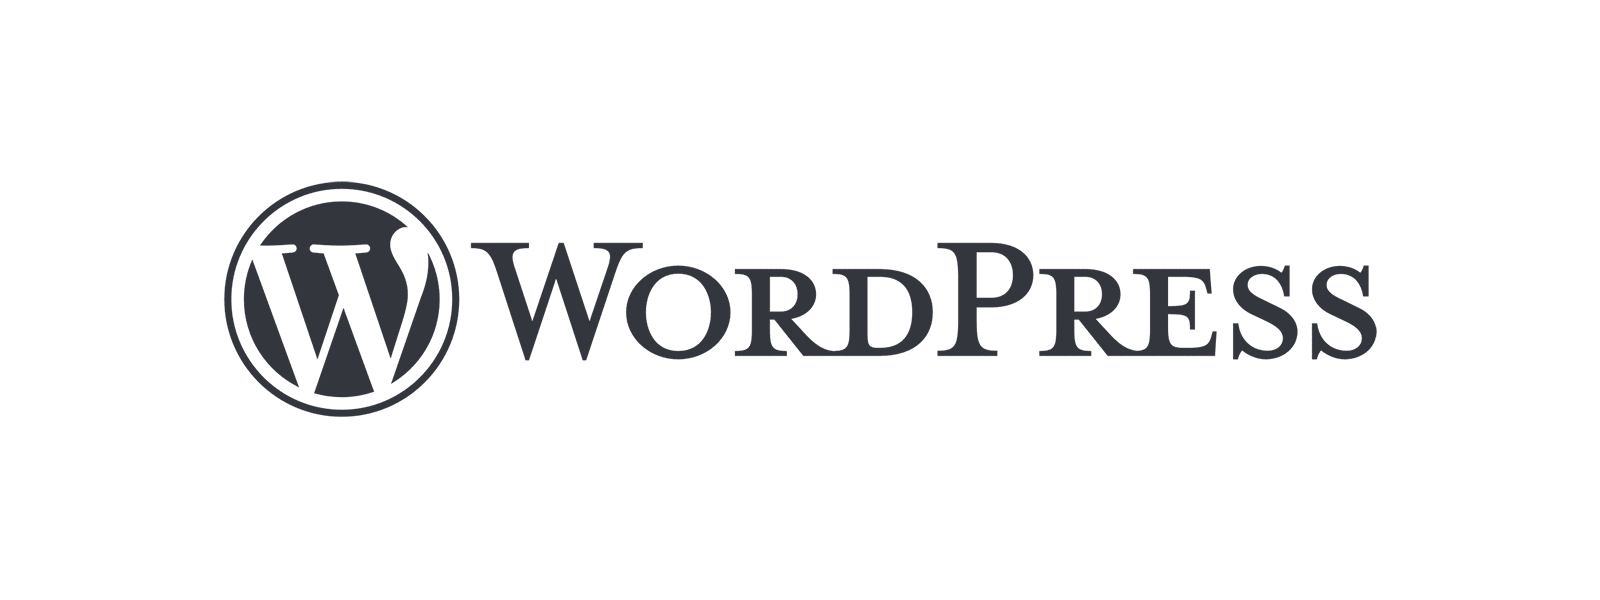 Créer une newsletter sur WordPress ?